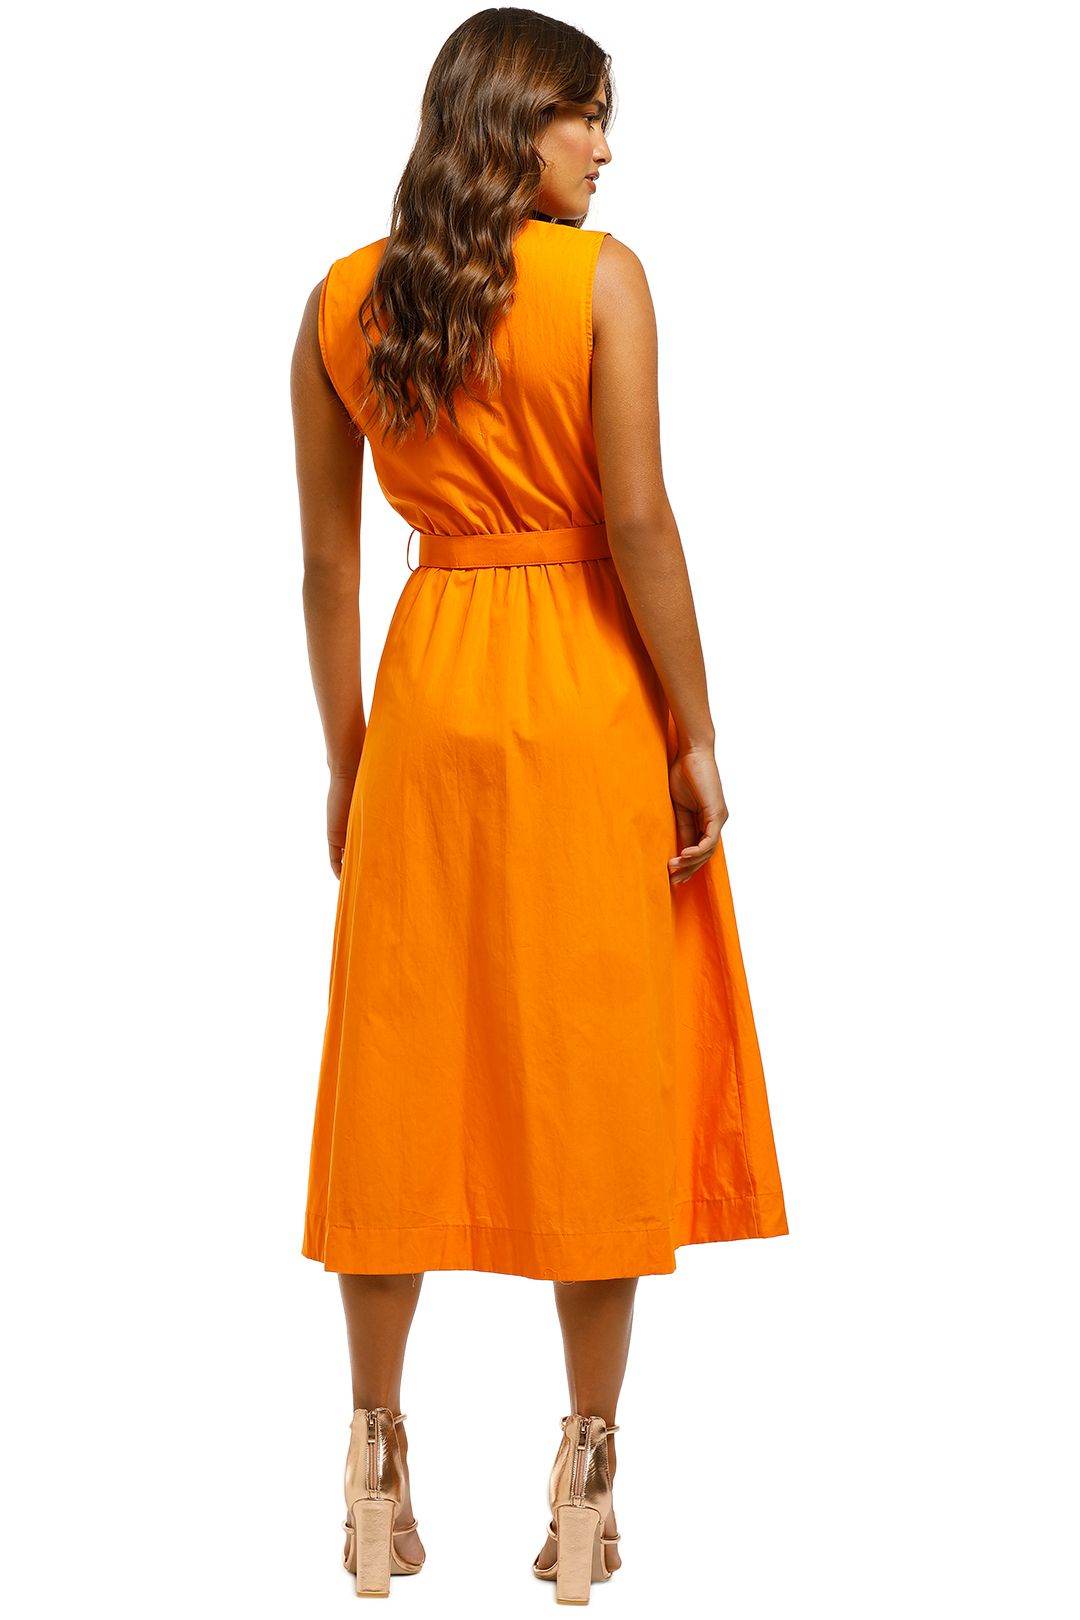 SWF-Orange-Midi-Dress-Orange-Back